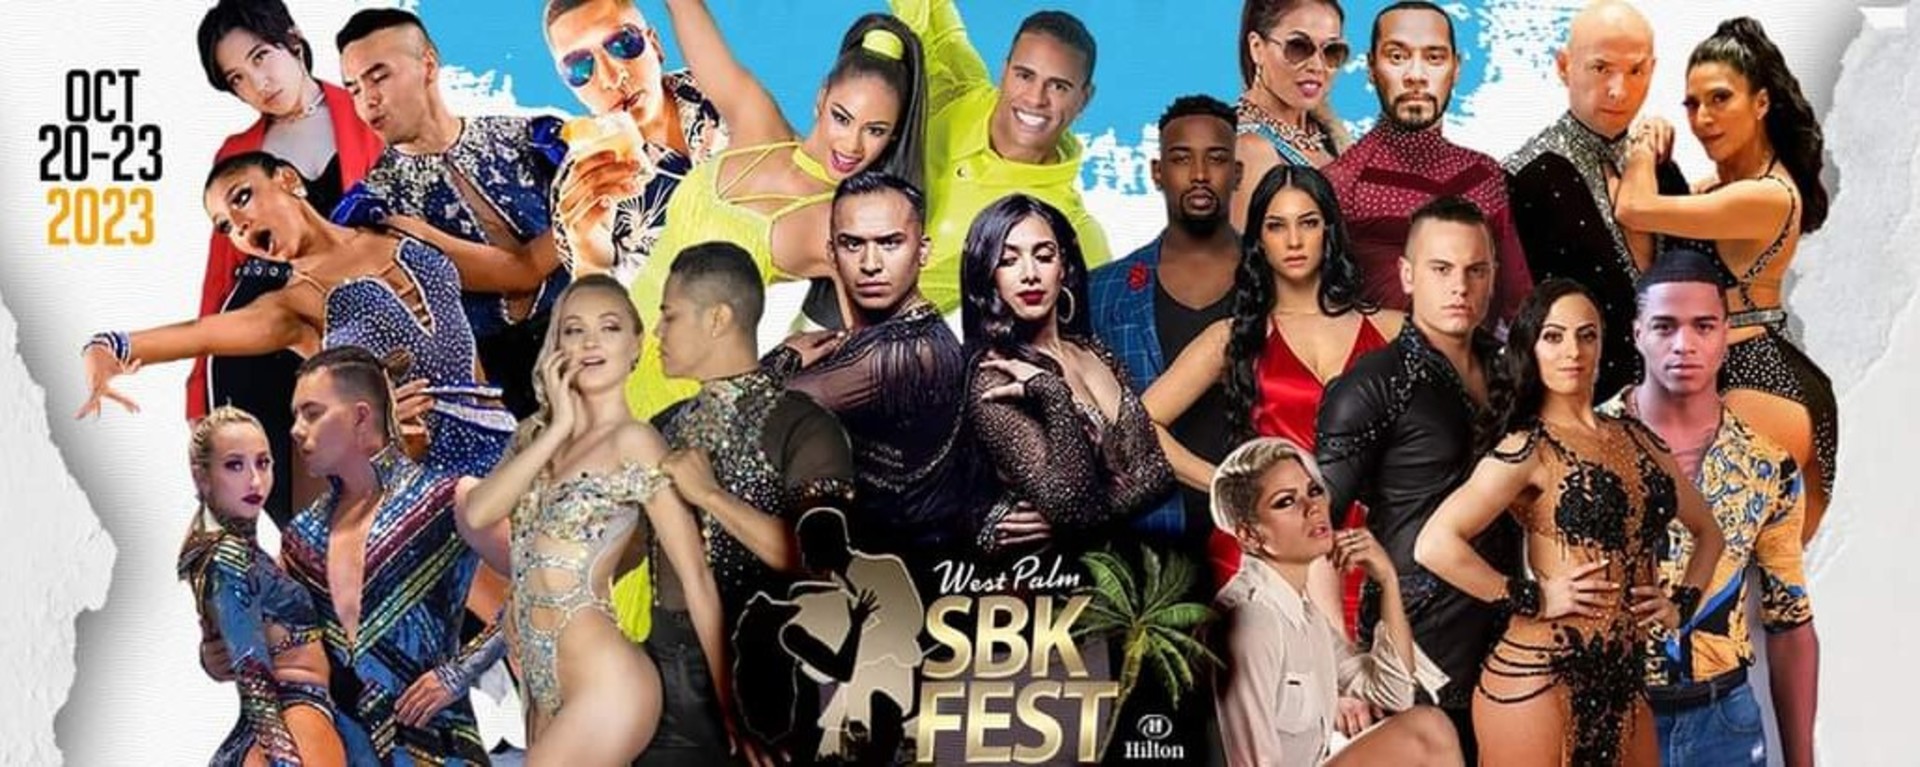 Buy tickets – West Palm SBK Fest 2023 – Hilton Palm Airport, Fri Oct 20, 2023 10:00 AM - Mon Oct 23, 2023 2:00 AM